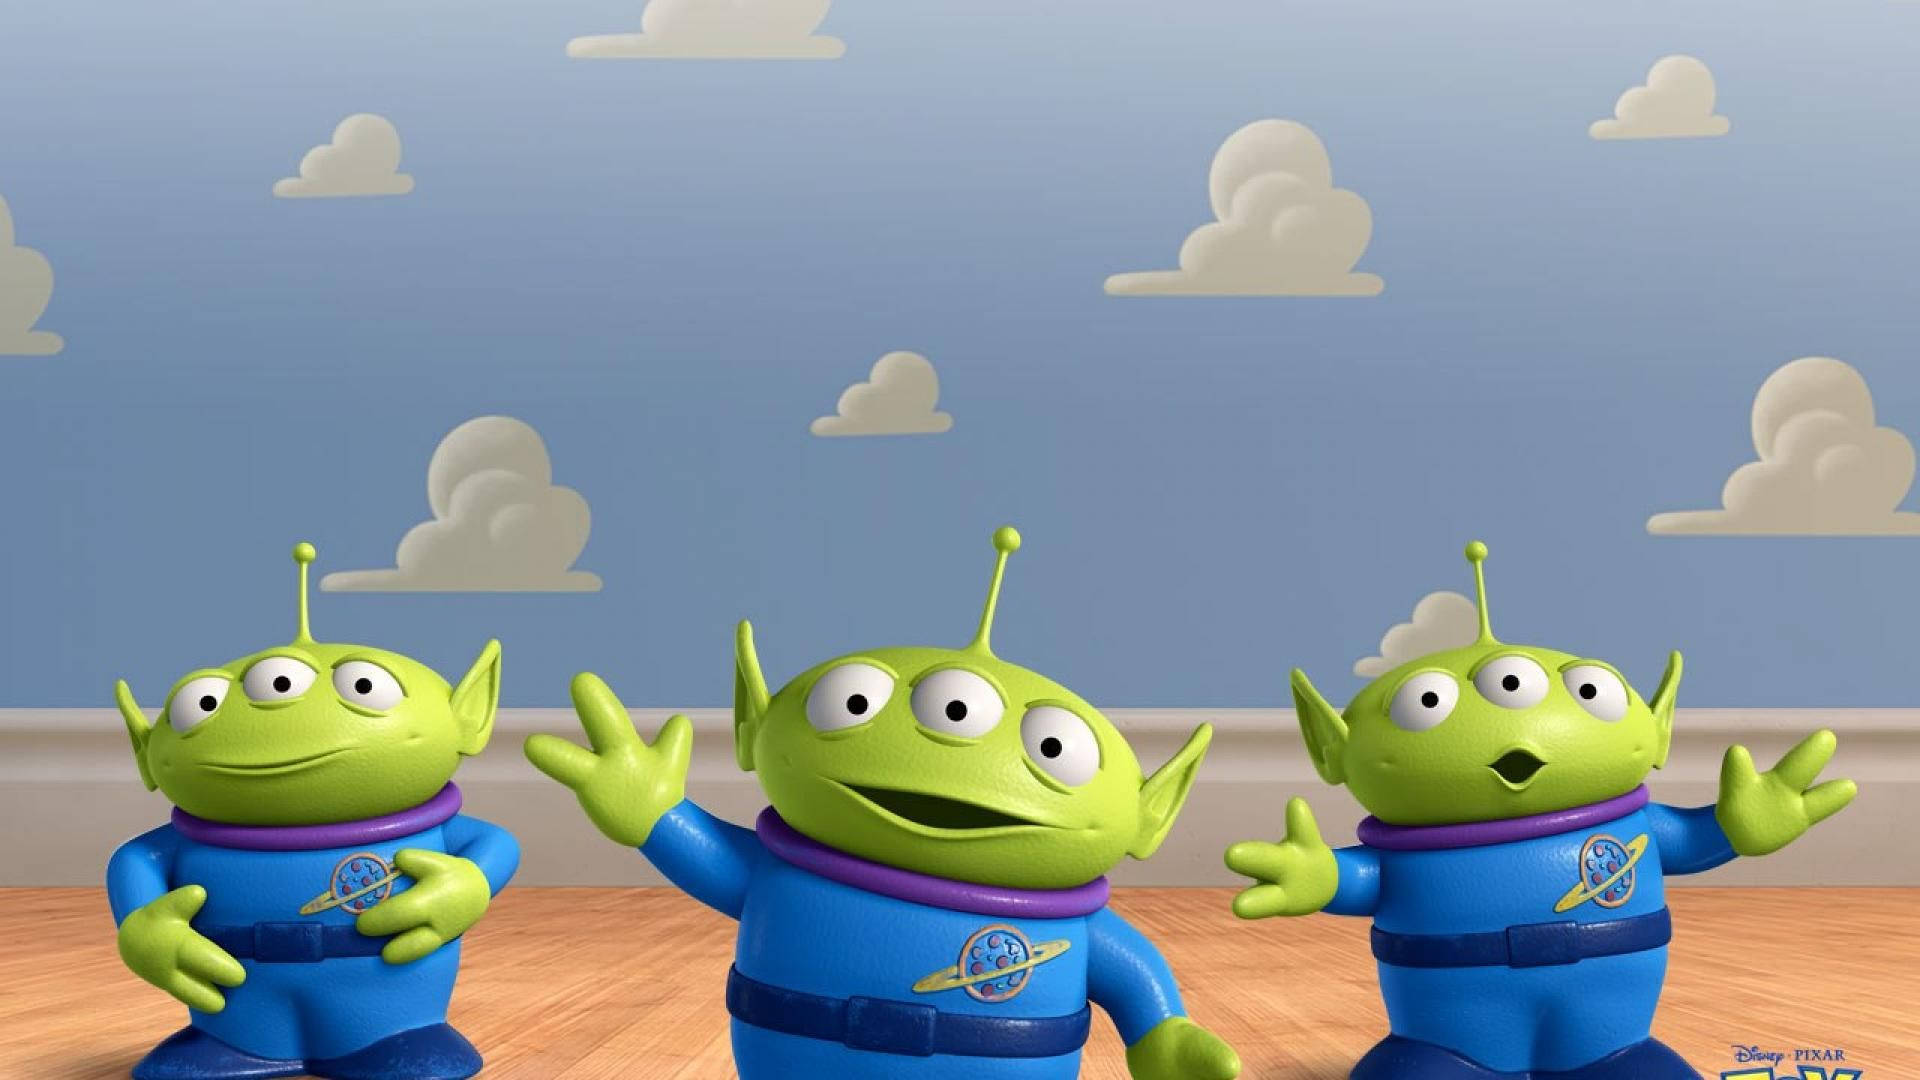 Toy Story Alien Triplets Background